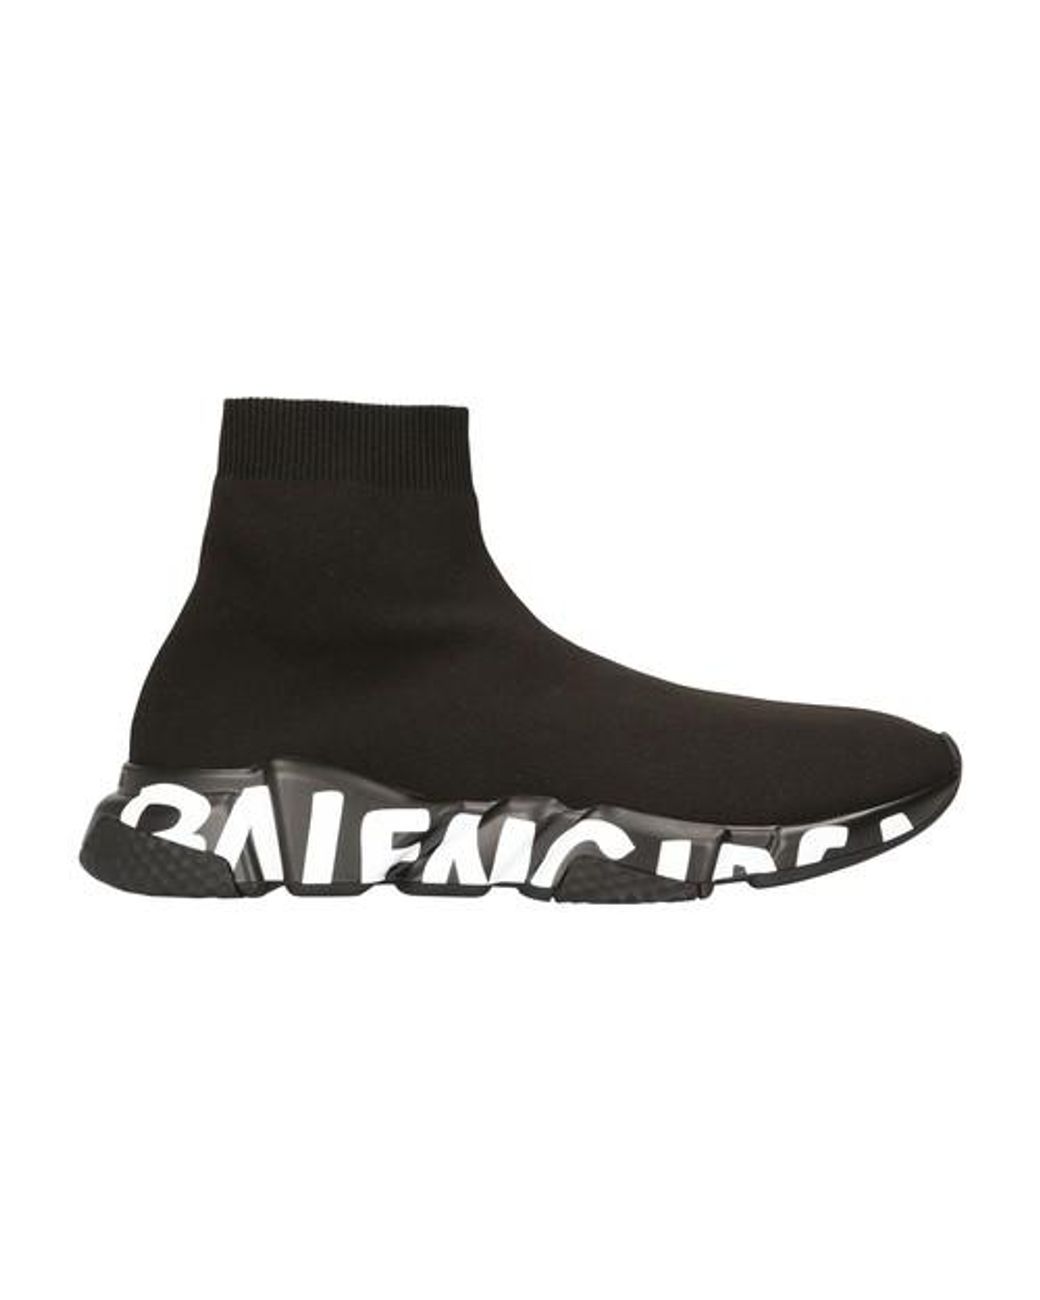 Balenciaga Speed Graffiti Sneaker in Black/White (Black) for Men - Lyst